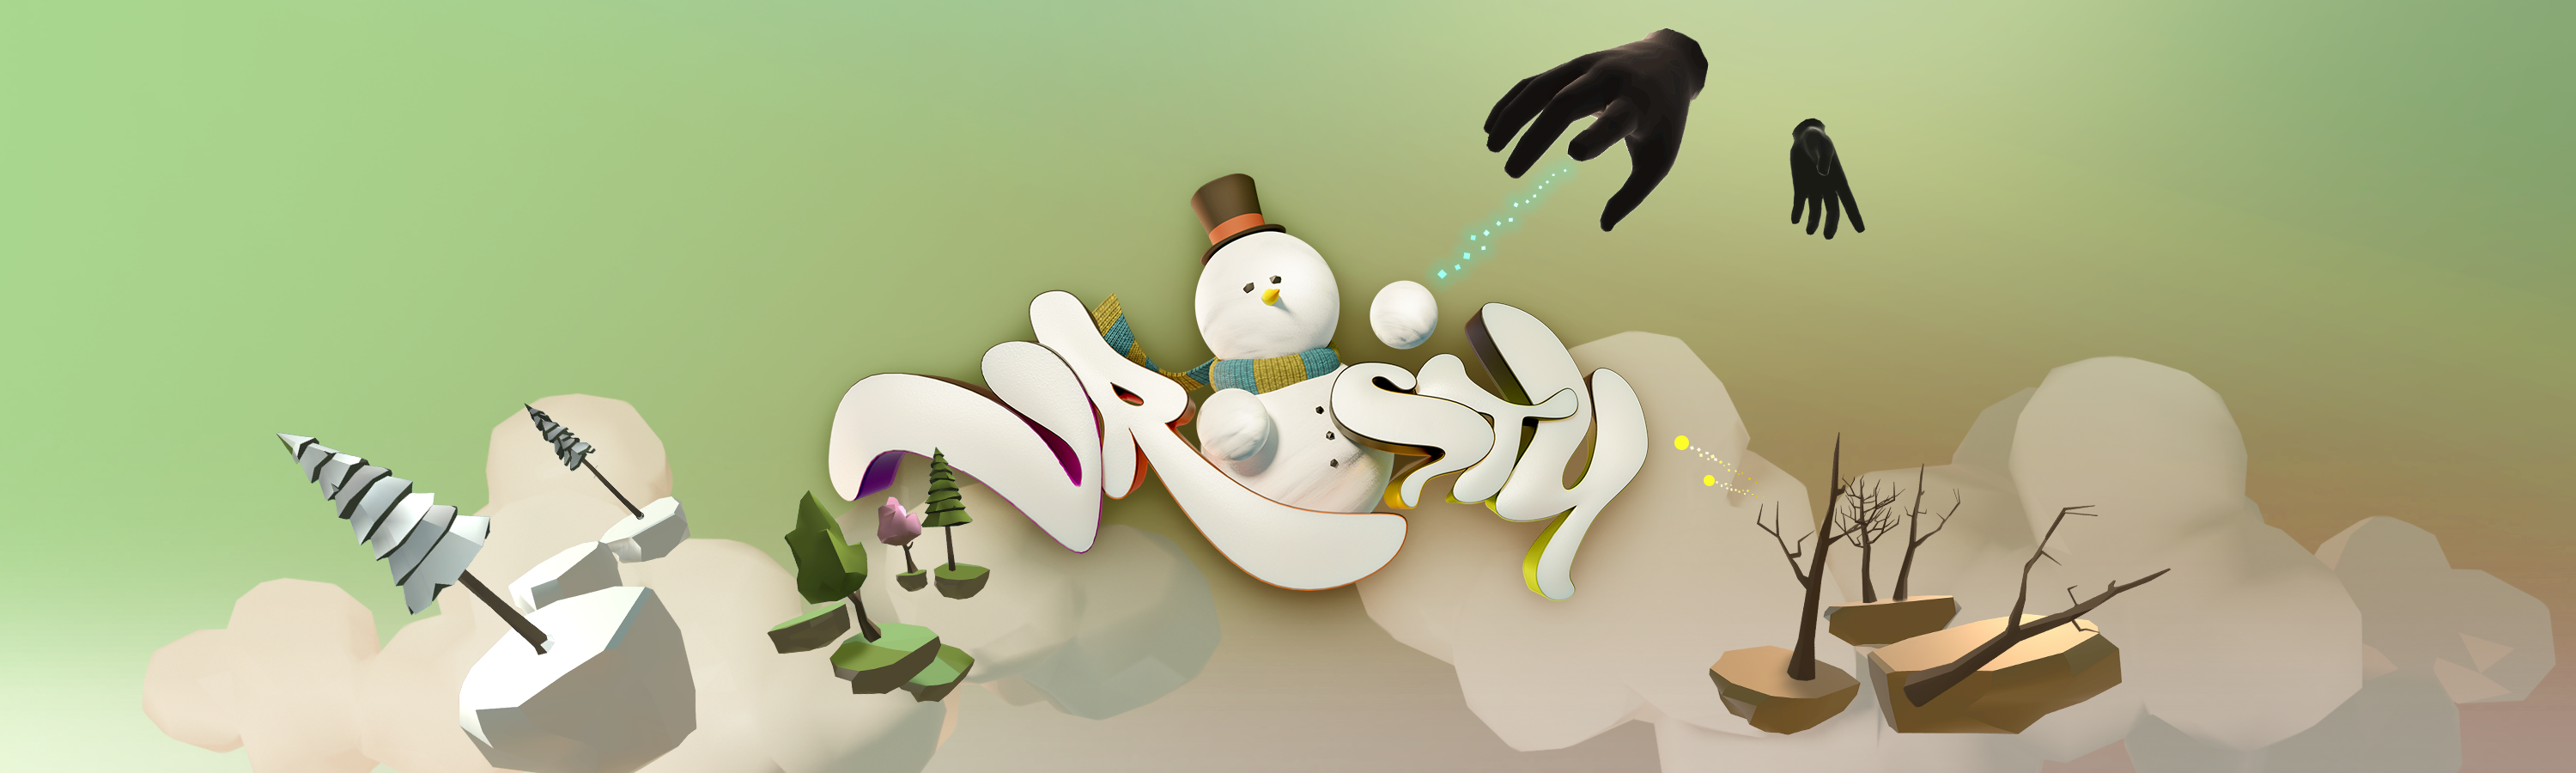 VRosty - A Snowmans Journey Into The Anthropocene